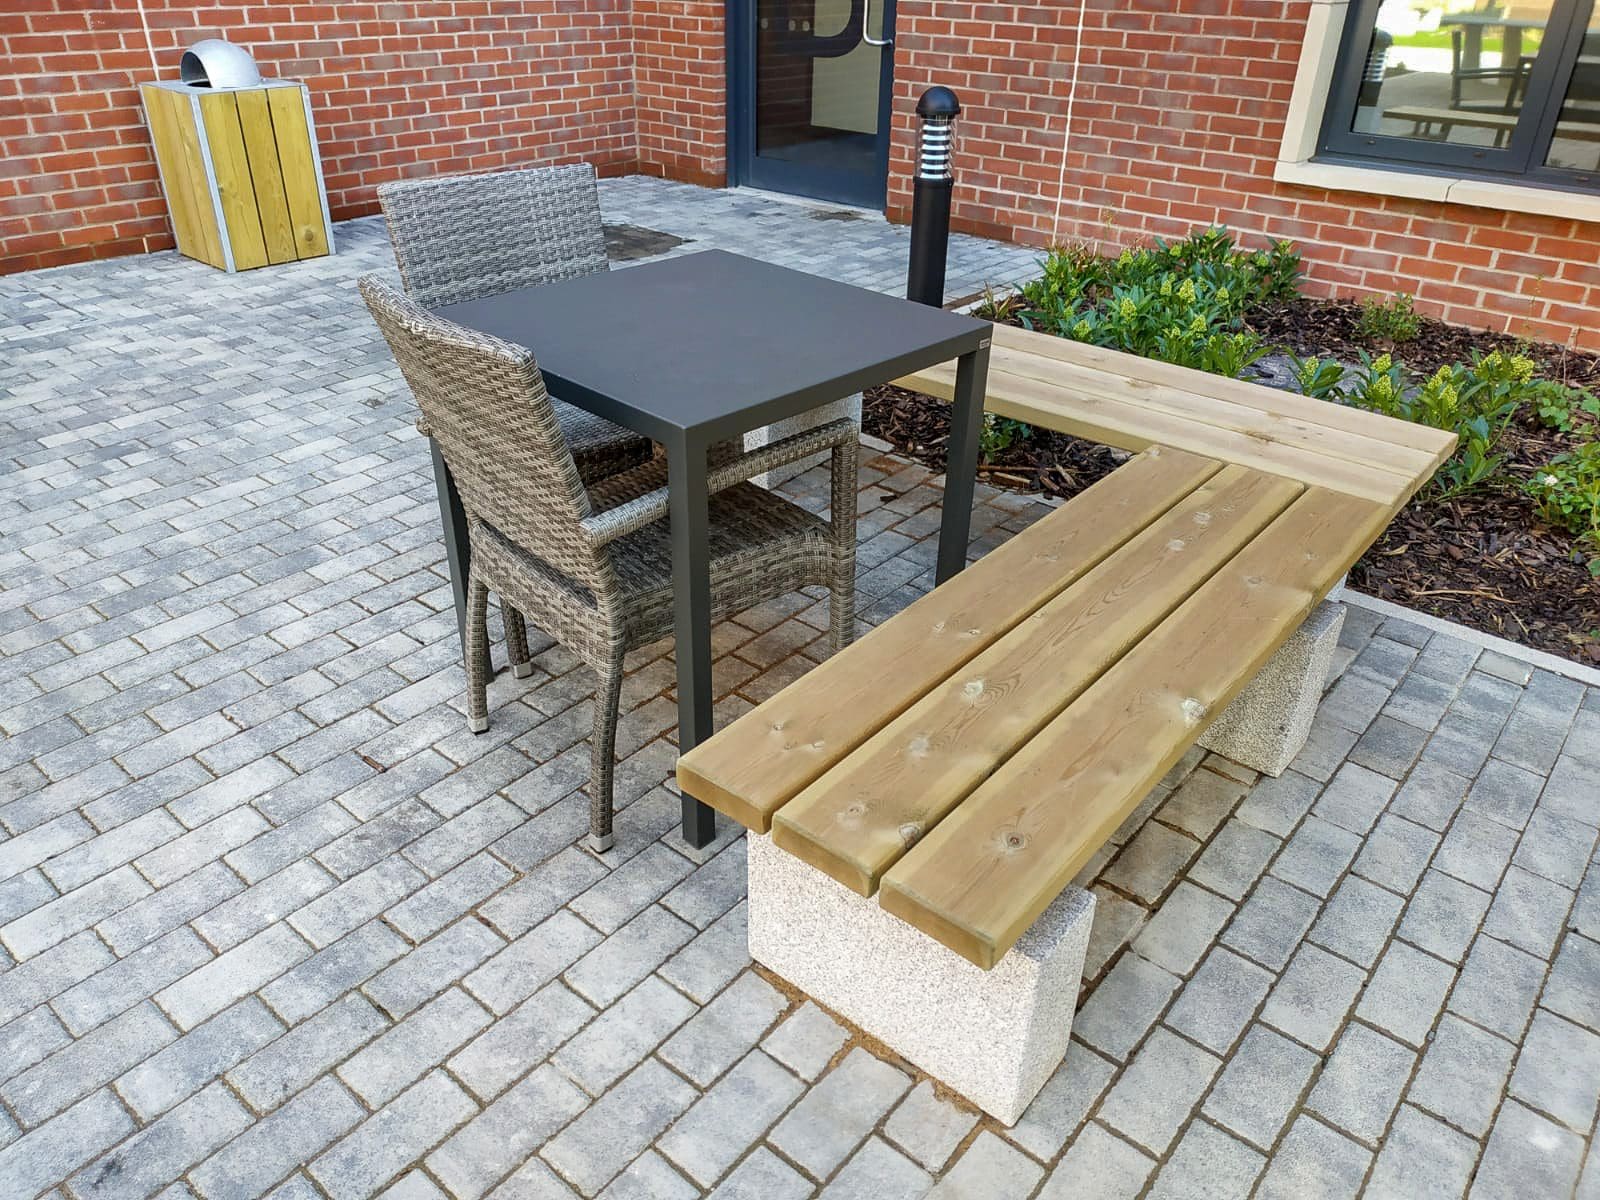 L shaped wooden outdoor benches around garden furniture